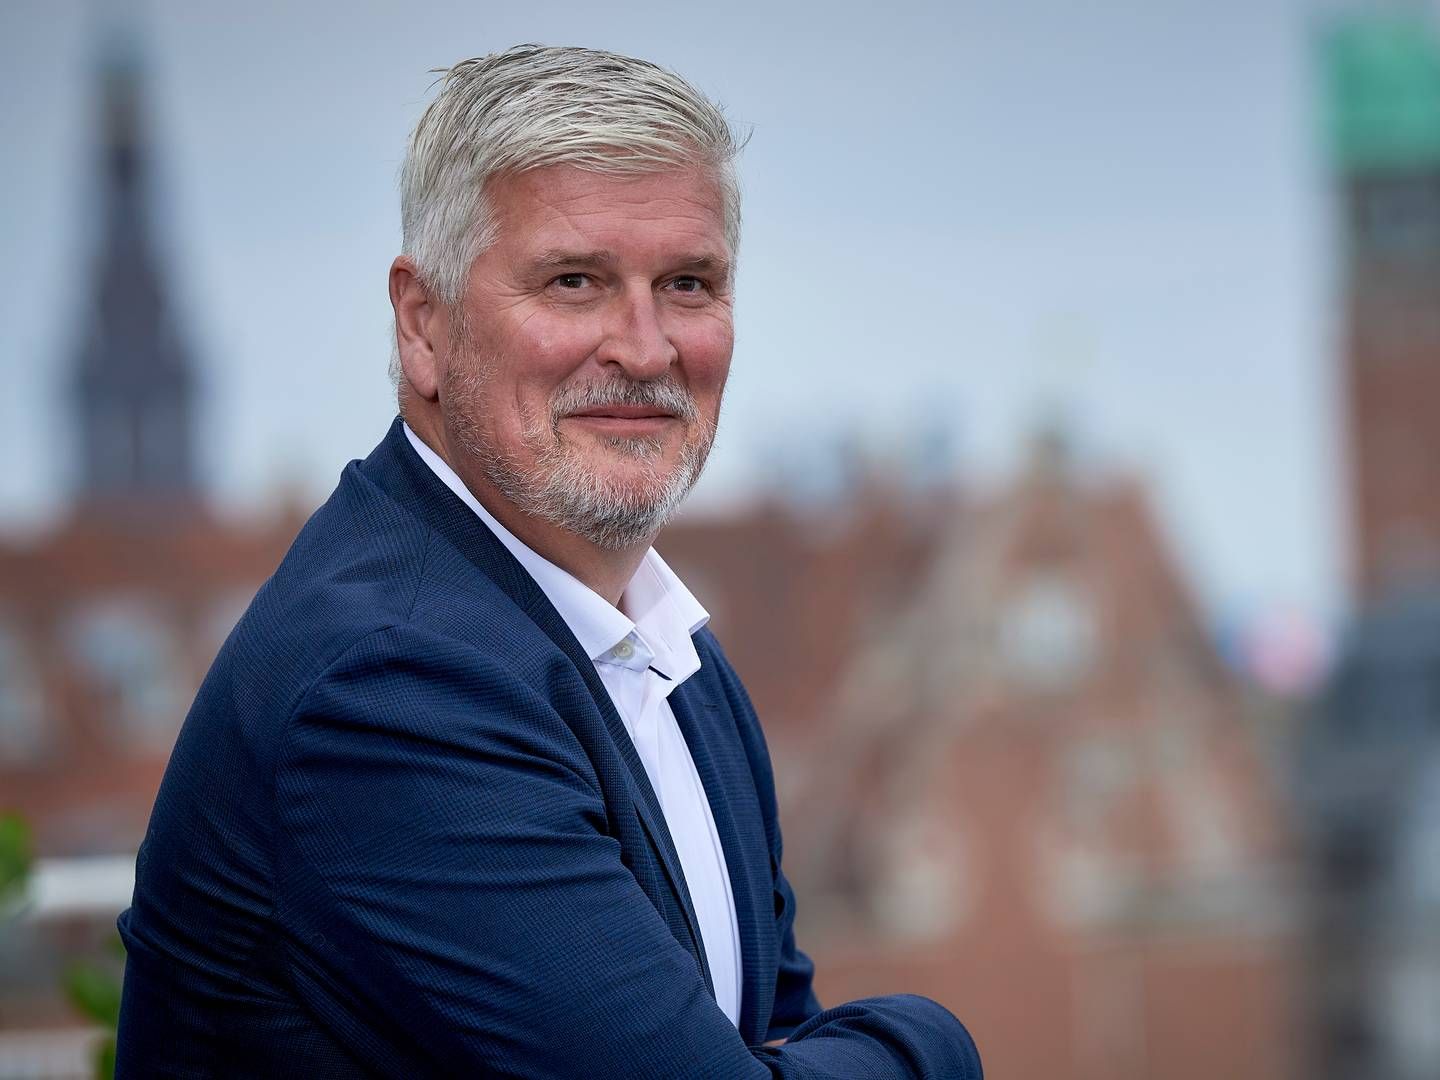 Casper Ryborg er pr. 1 oktober ansat som landechef i Devoteam Danmark, hvor han overtager styringen efter Marianne Tholin. | Foto: PR